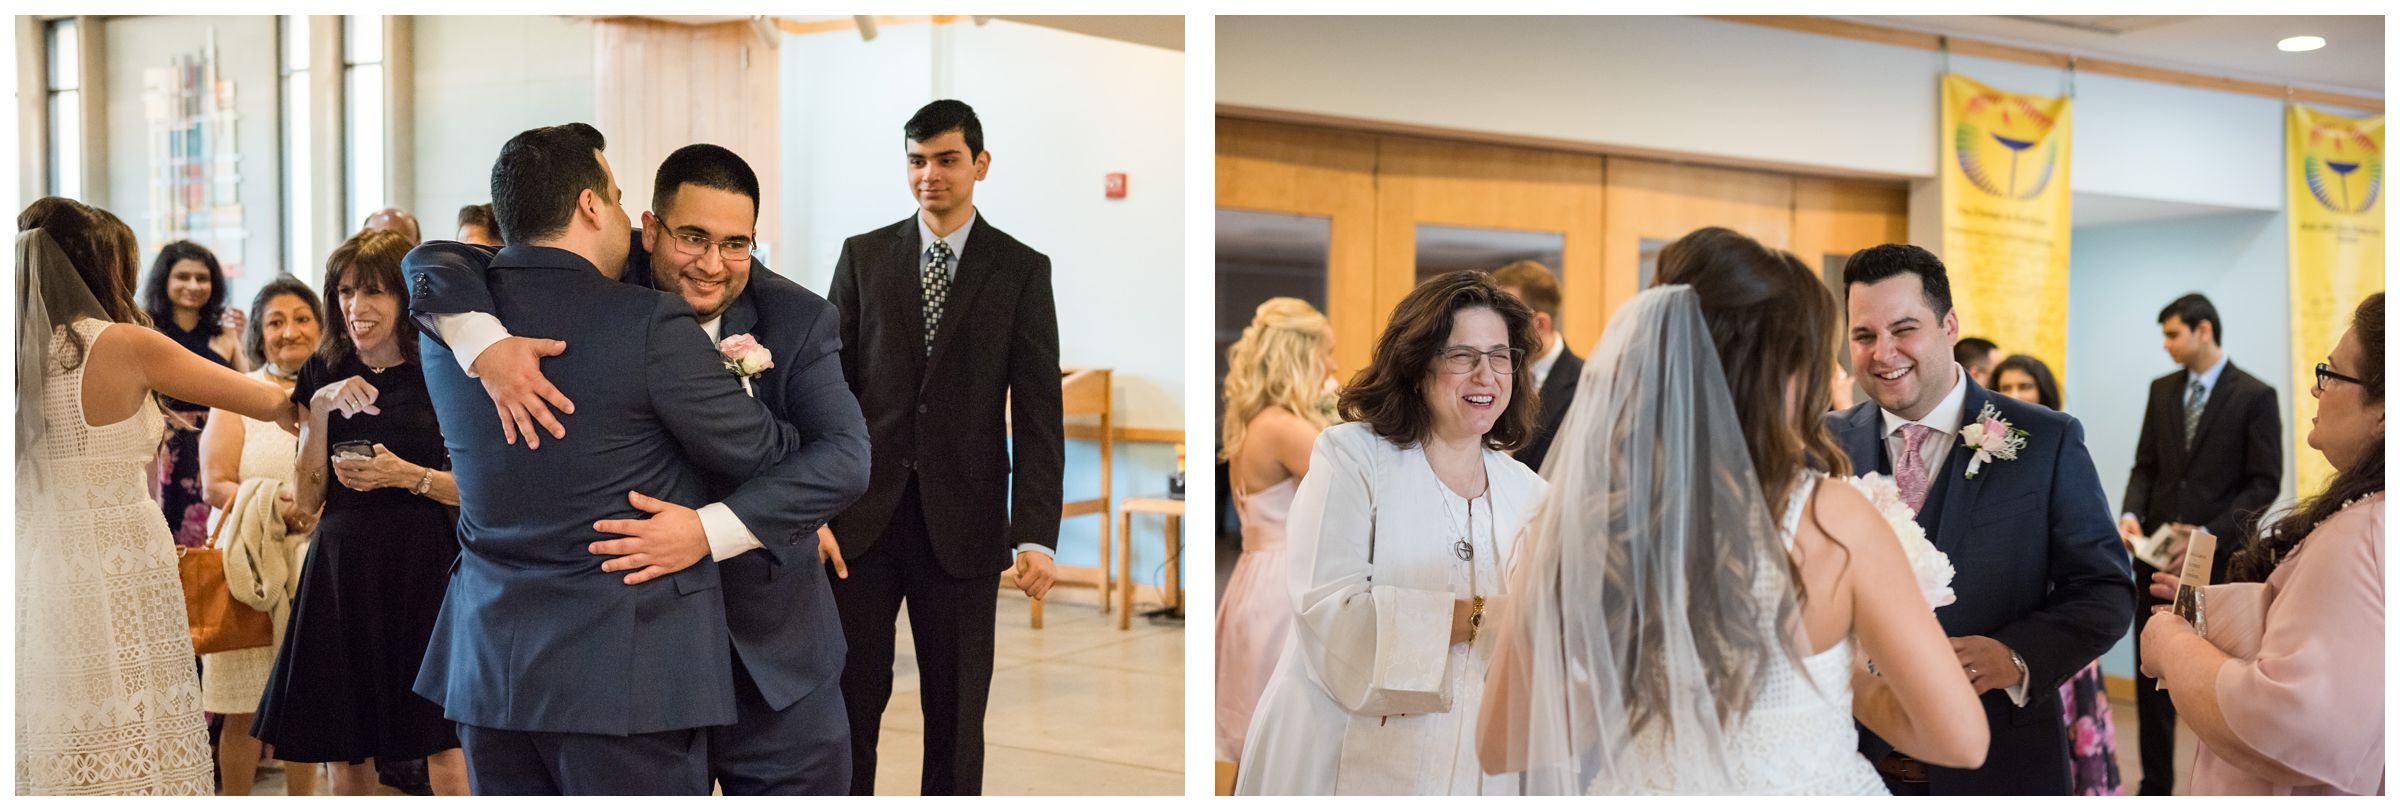 wedding ceremony at the Unitarian Universalist Church in Arlington, Virginia